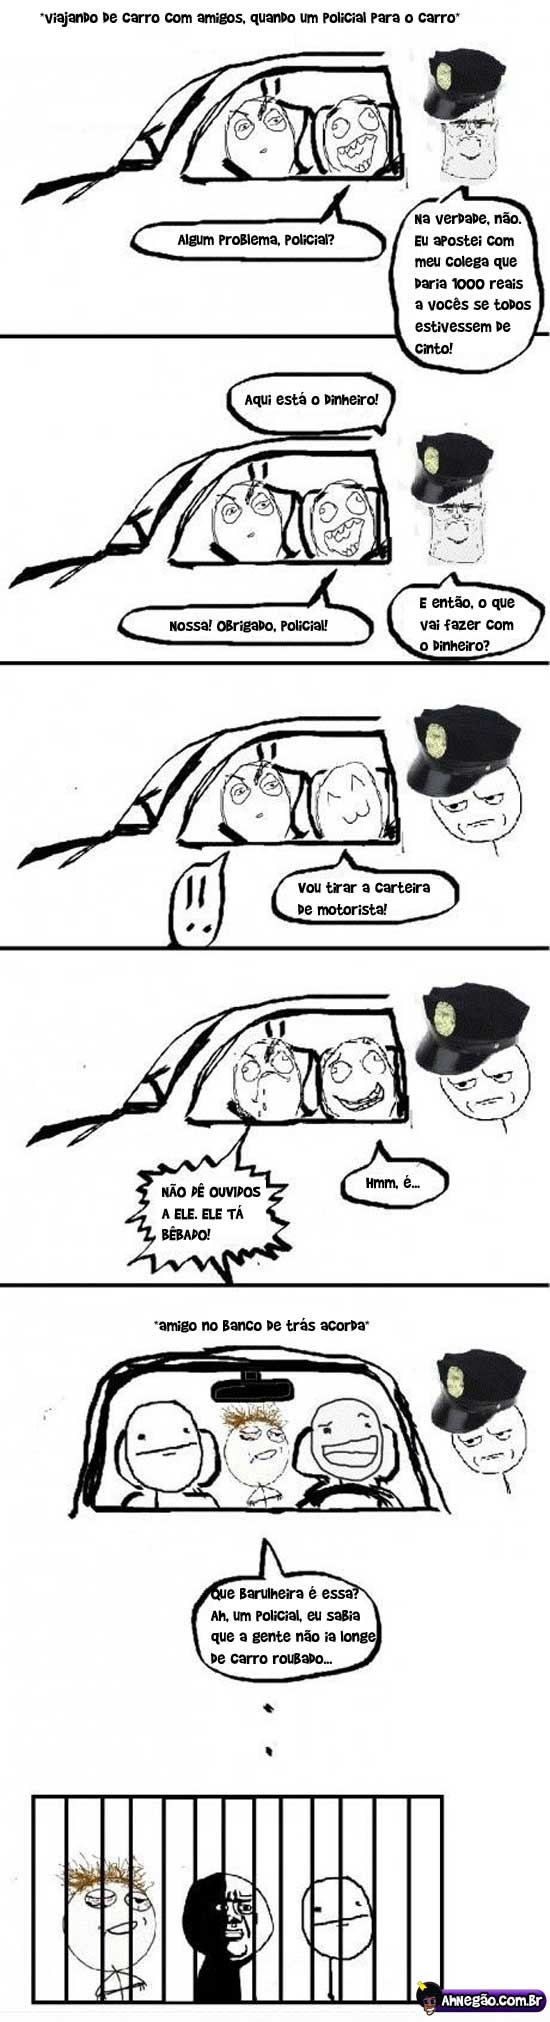 Abordagem Policial - meme